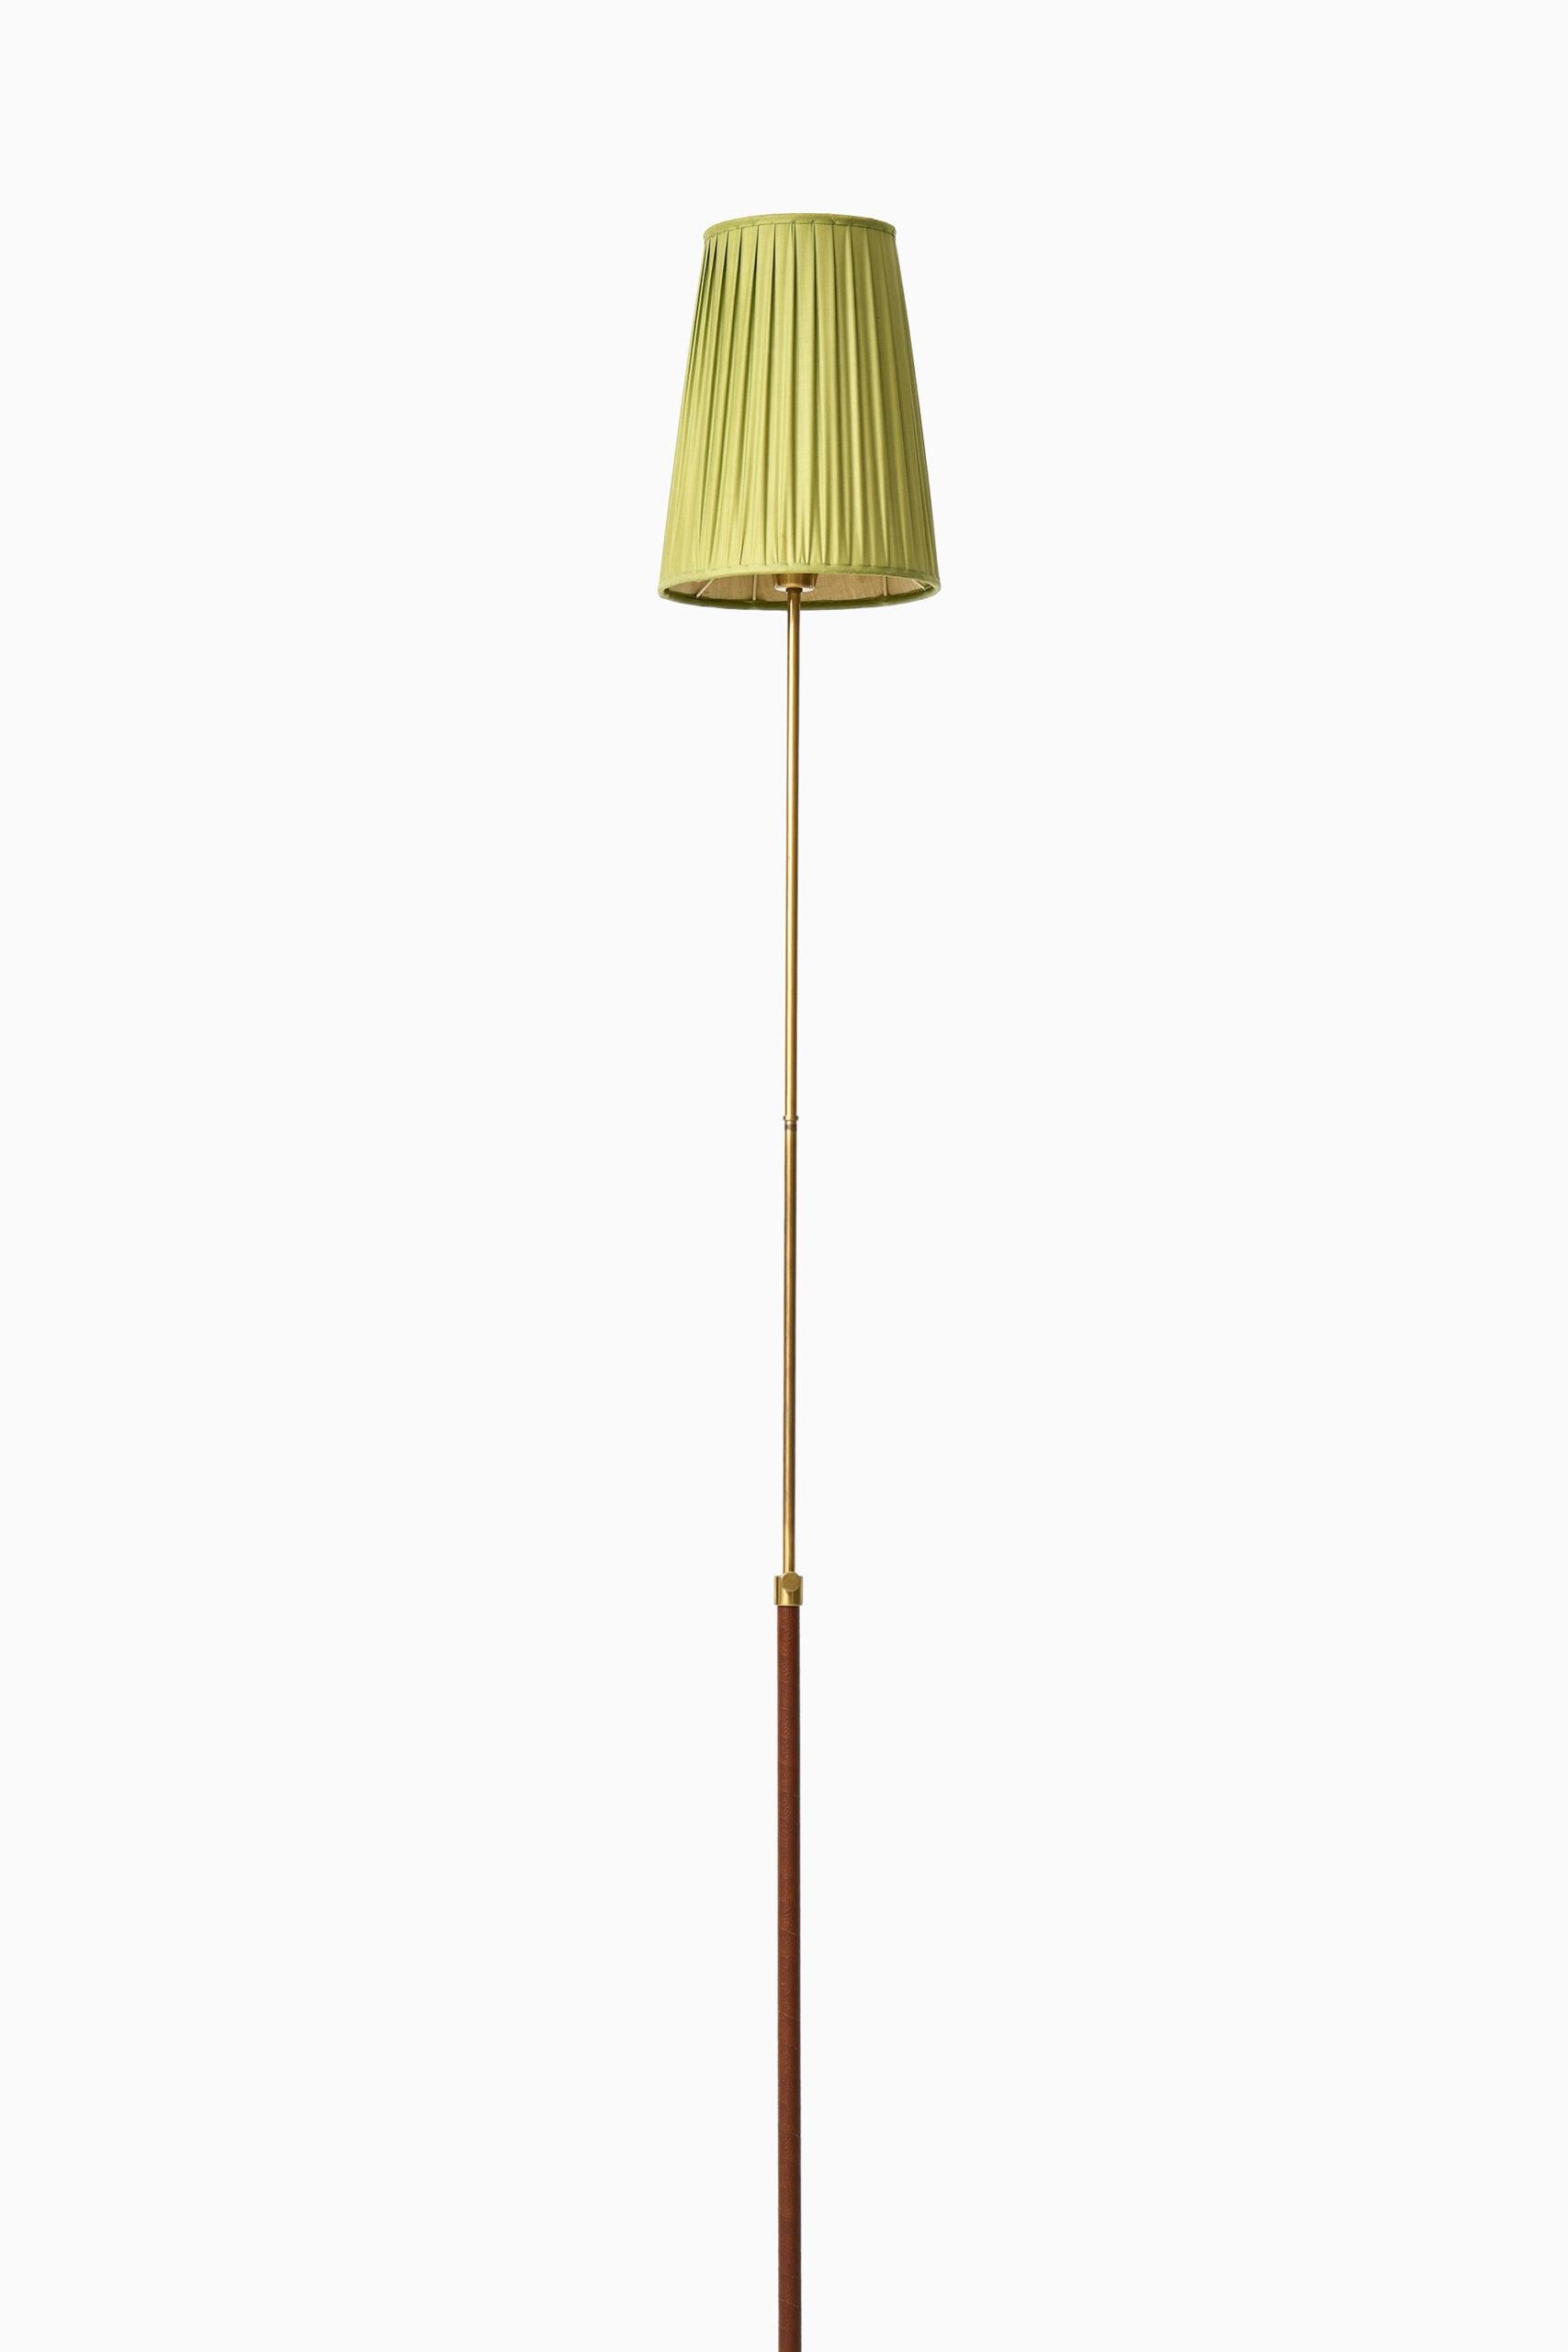 Brass Hans Bergström Floor Lamp Model 544 Produced by Ateljé Lyktan in Åhus, Sweden For Sale